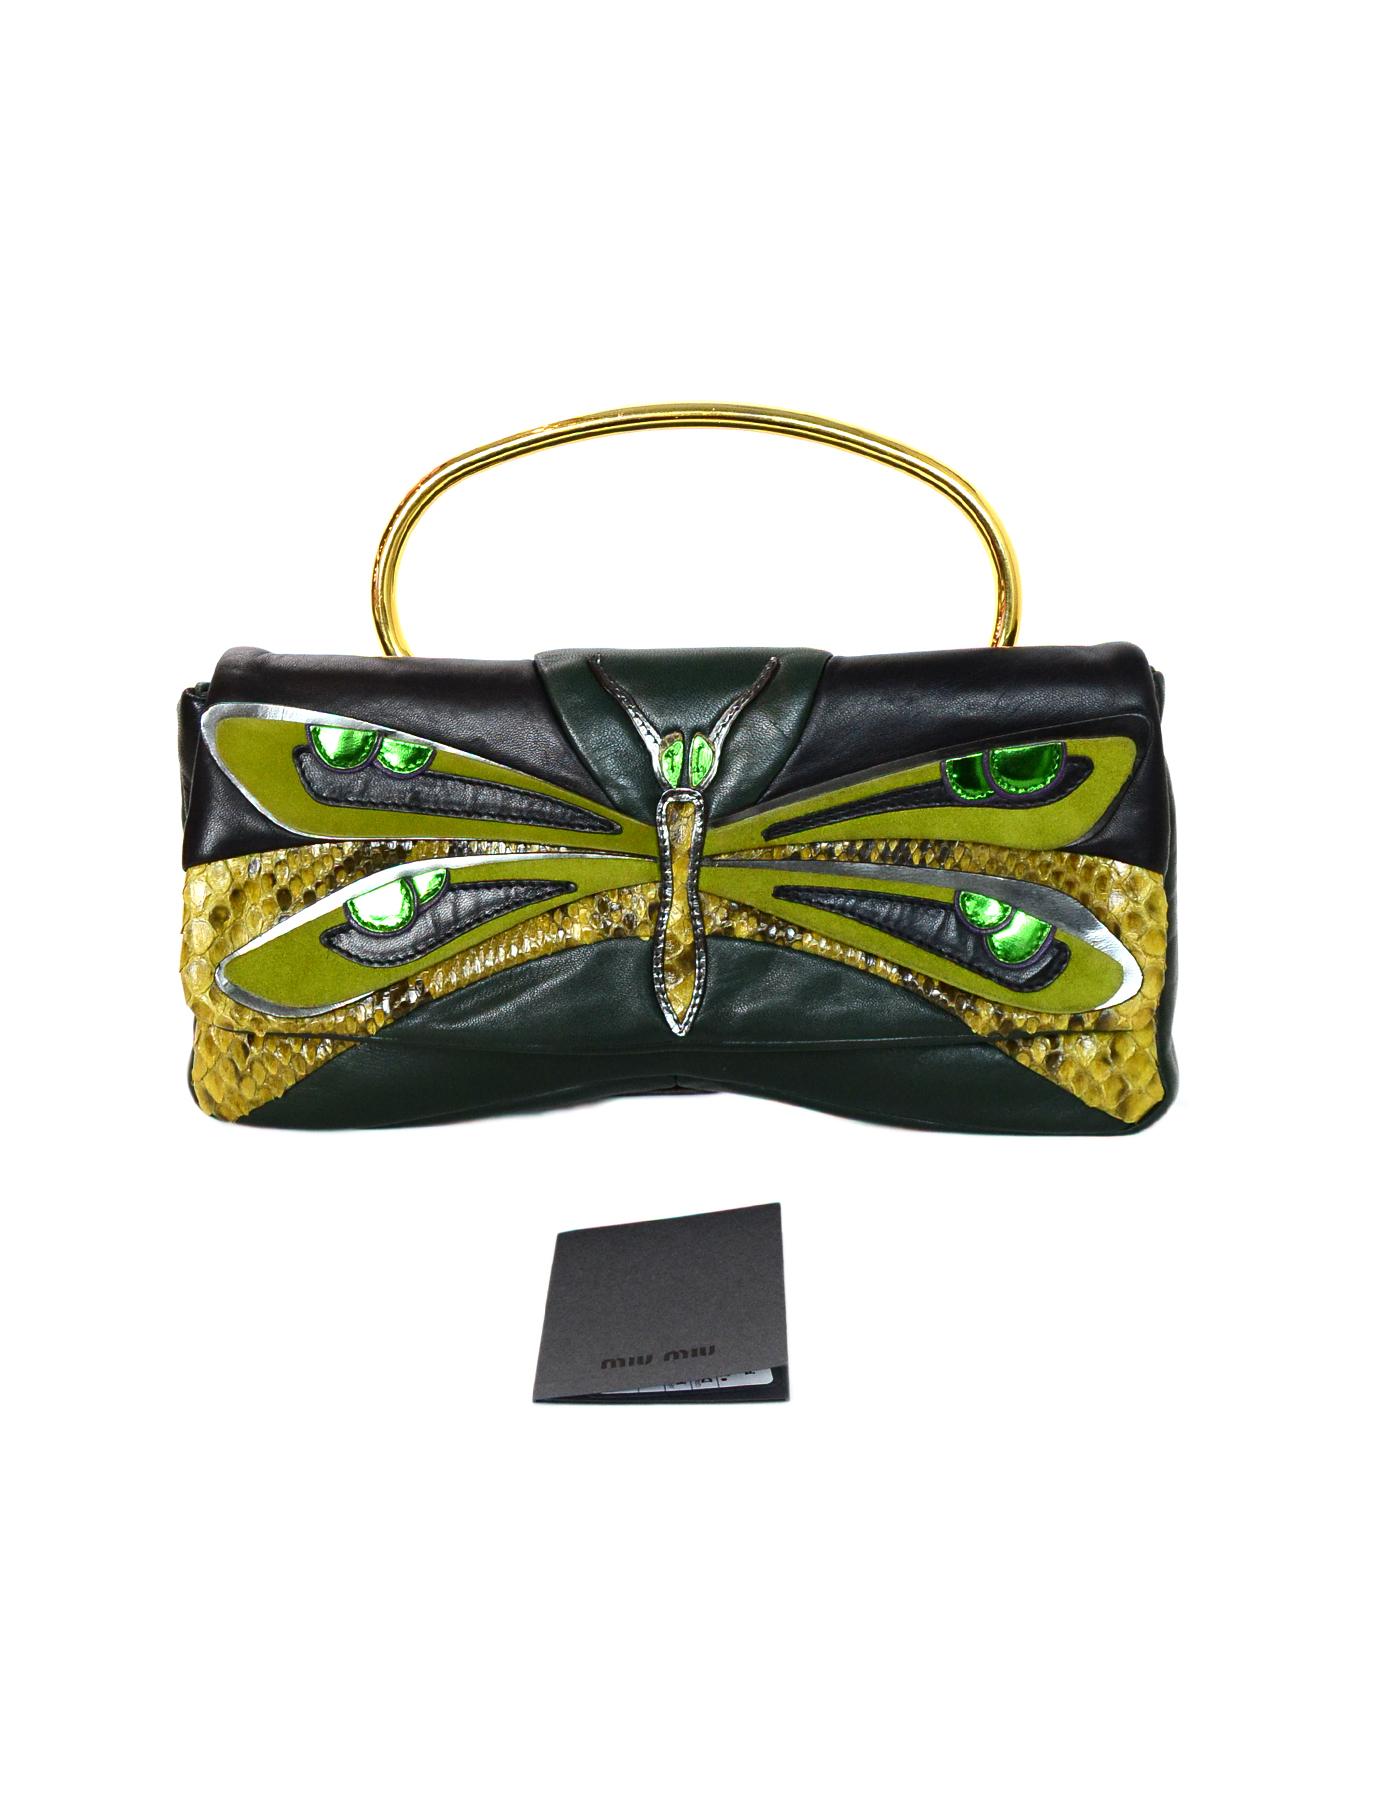 Miu Miu Green Leather/Python Multi-Color Dragonfly Crossbody/Clutch Bag 2